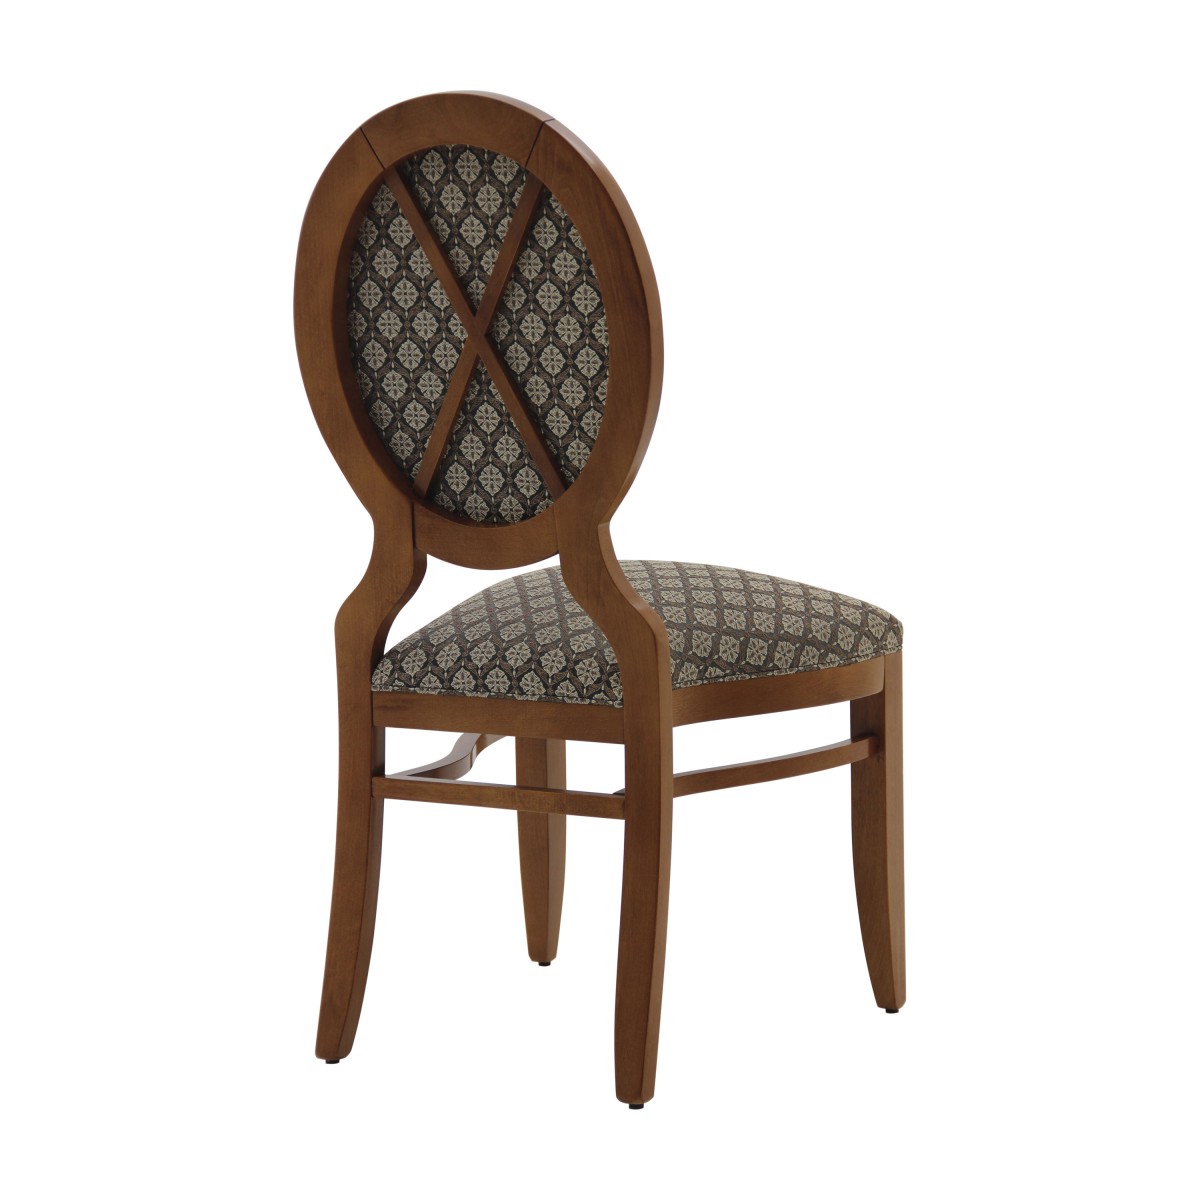 Chair Anello - Sevensedie